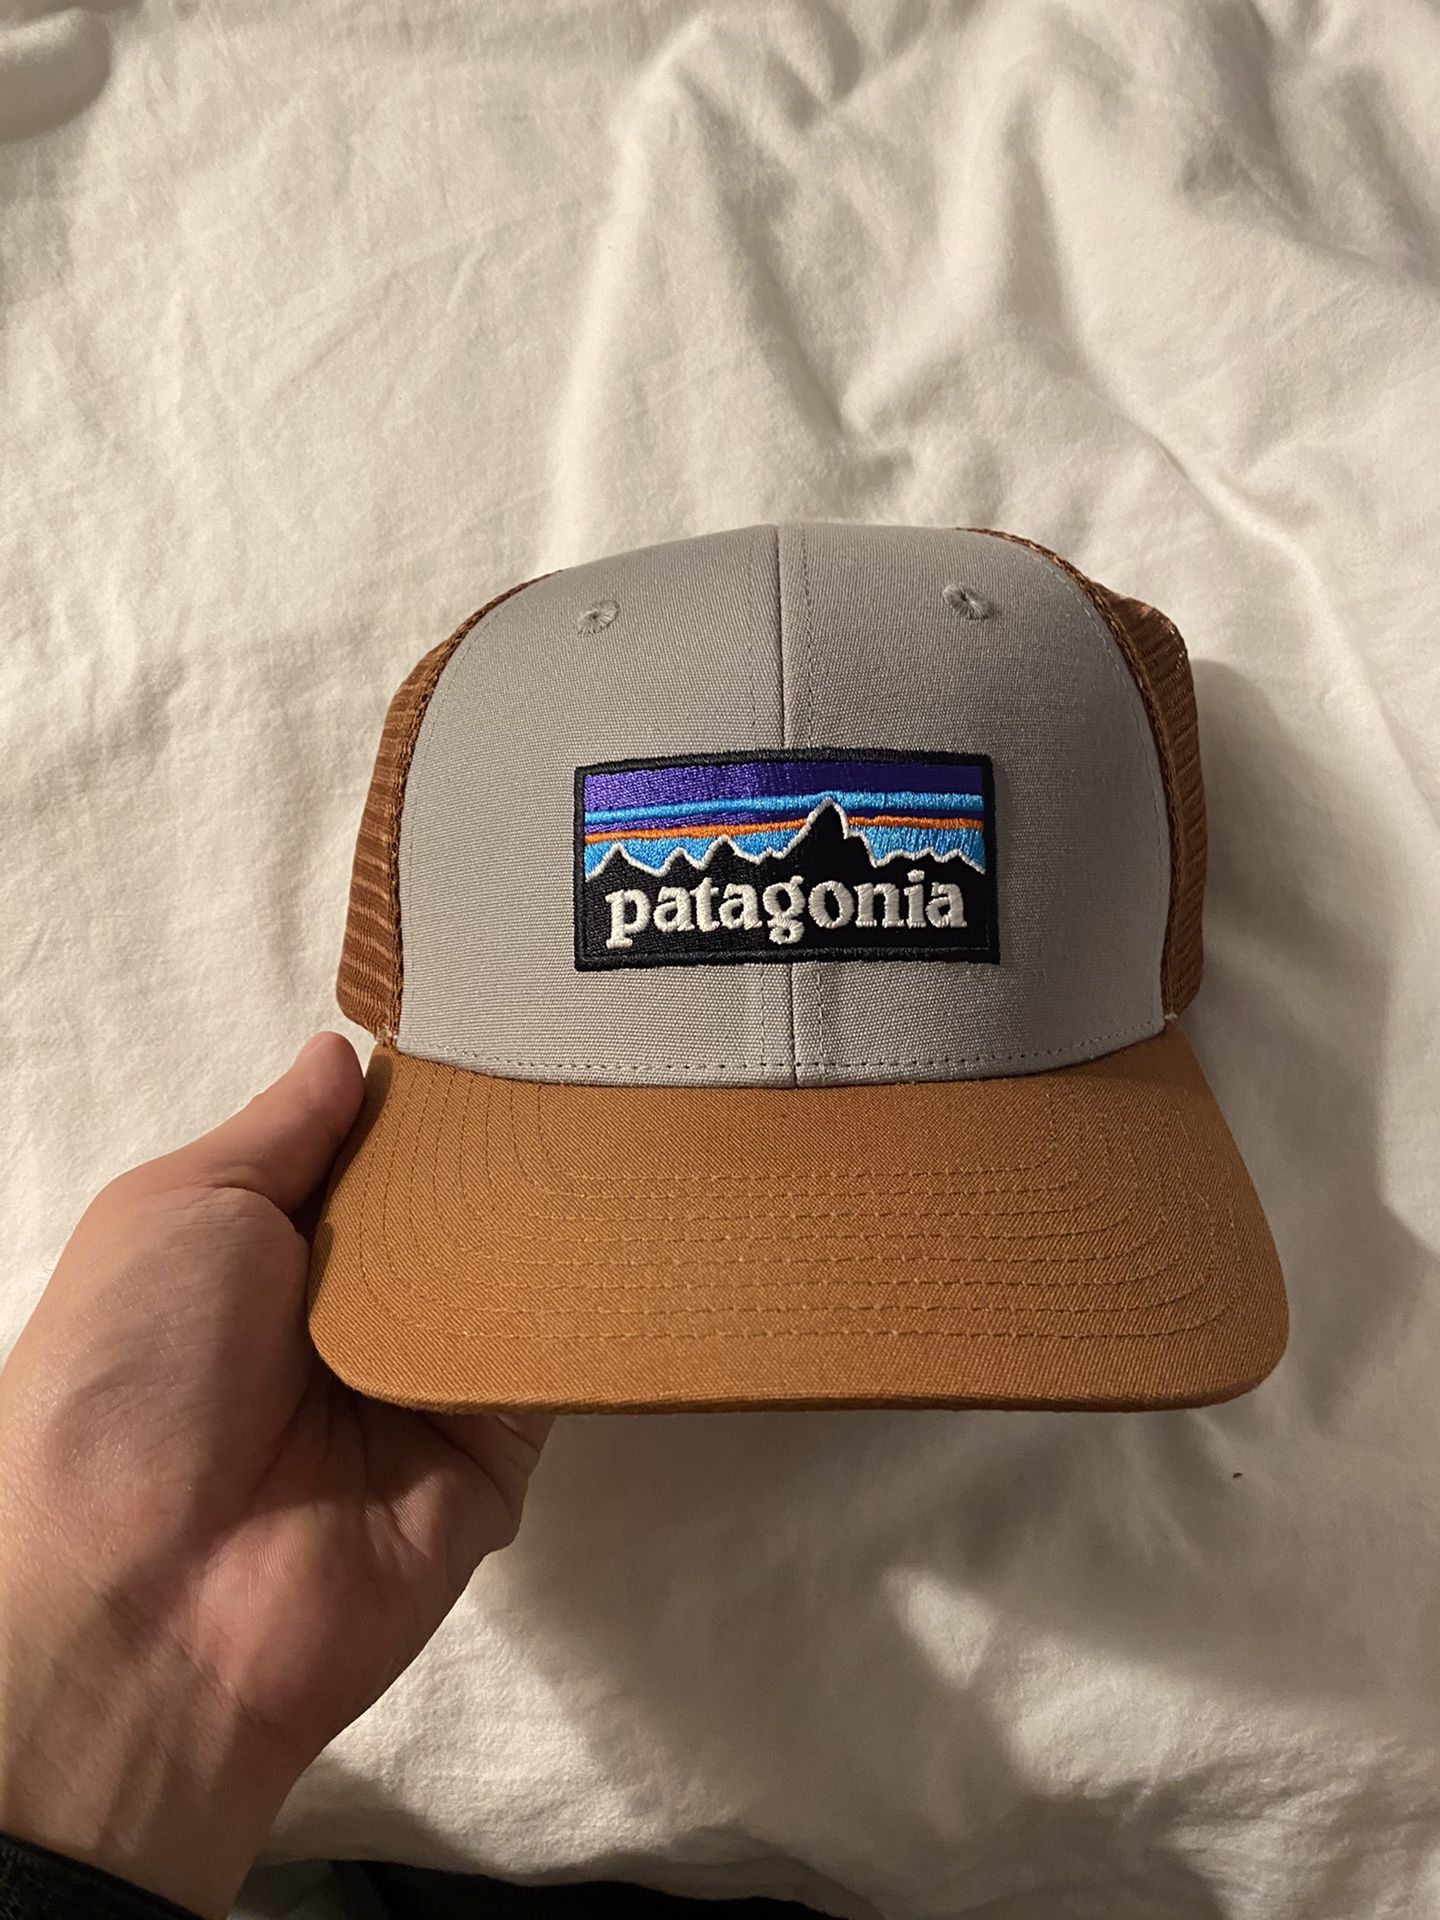 Patagonia hat. Brand new.